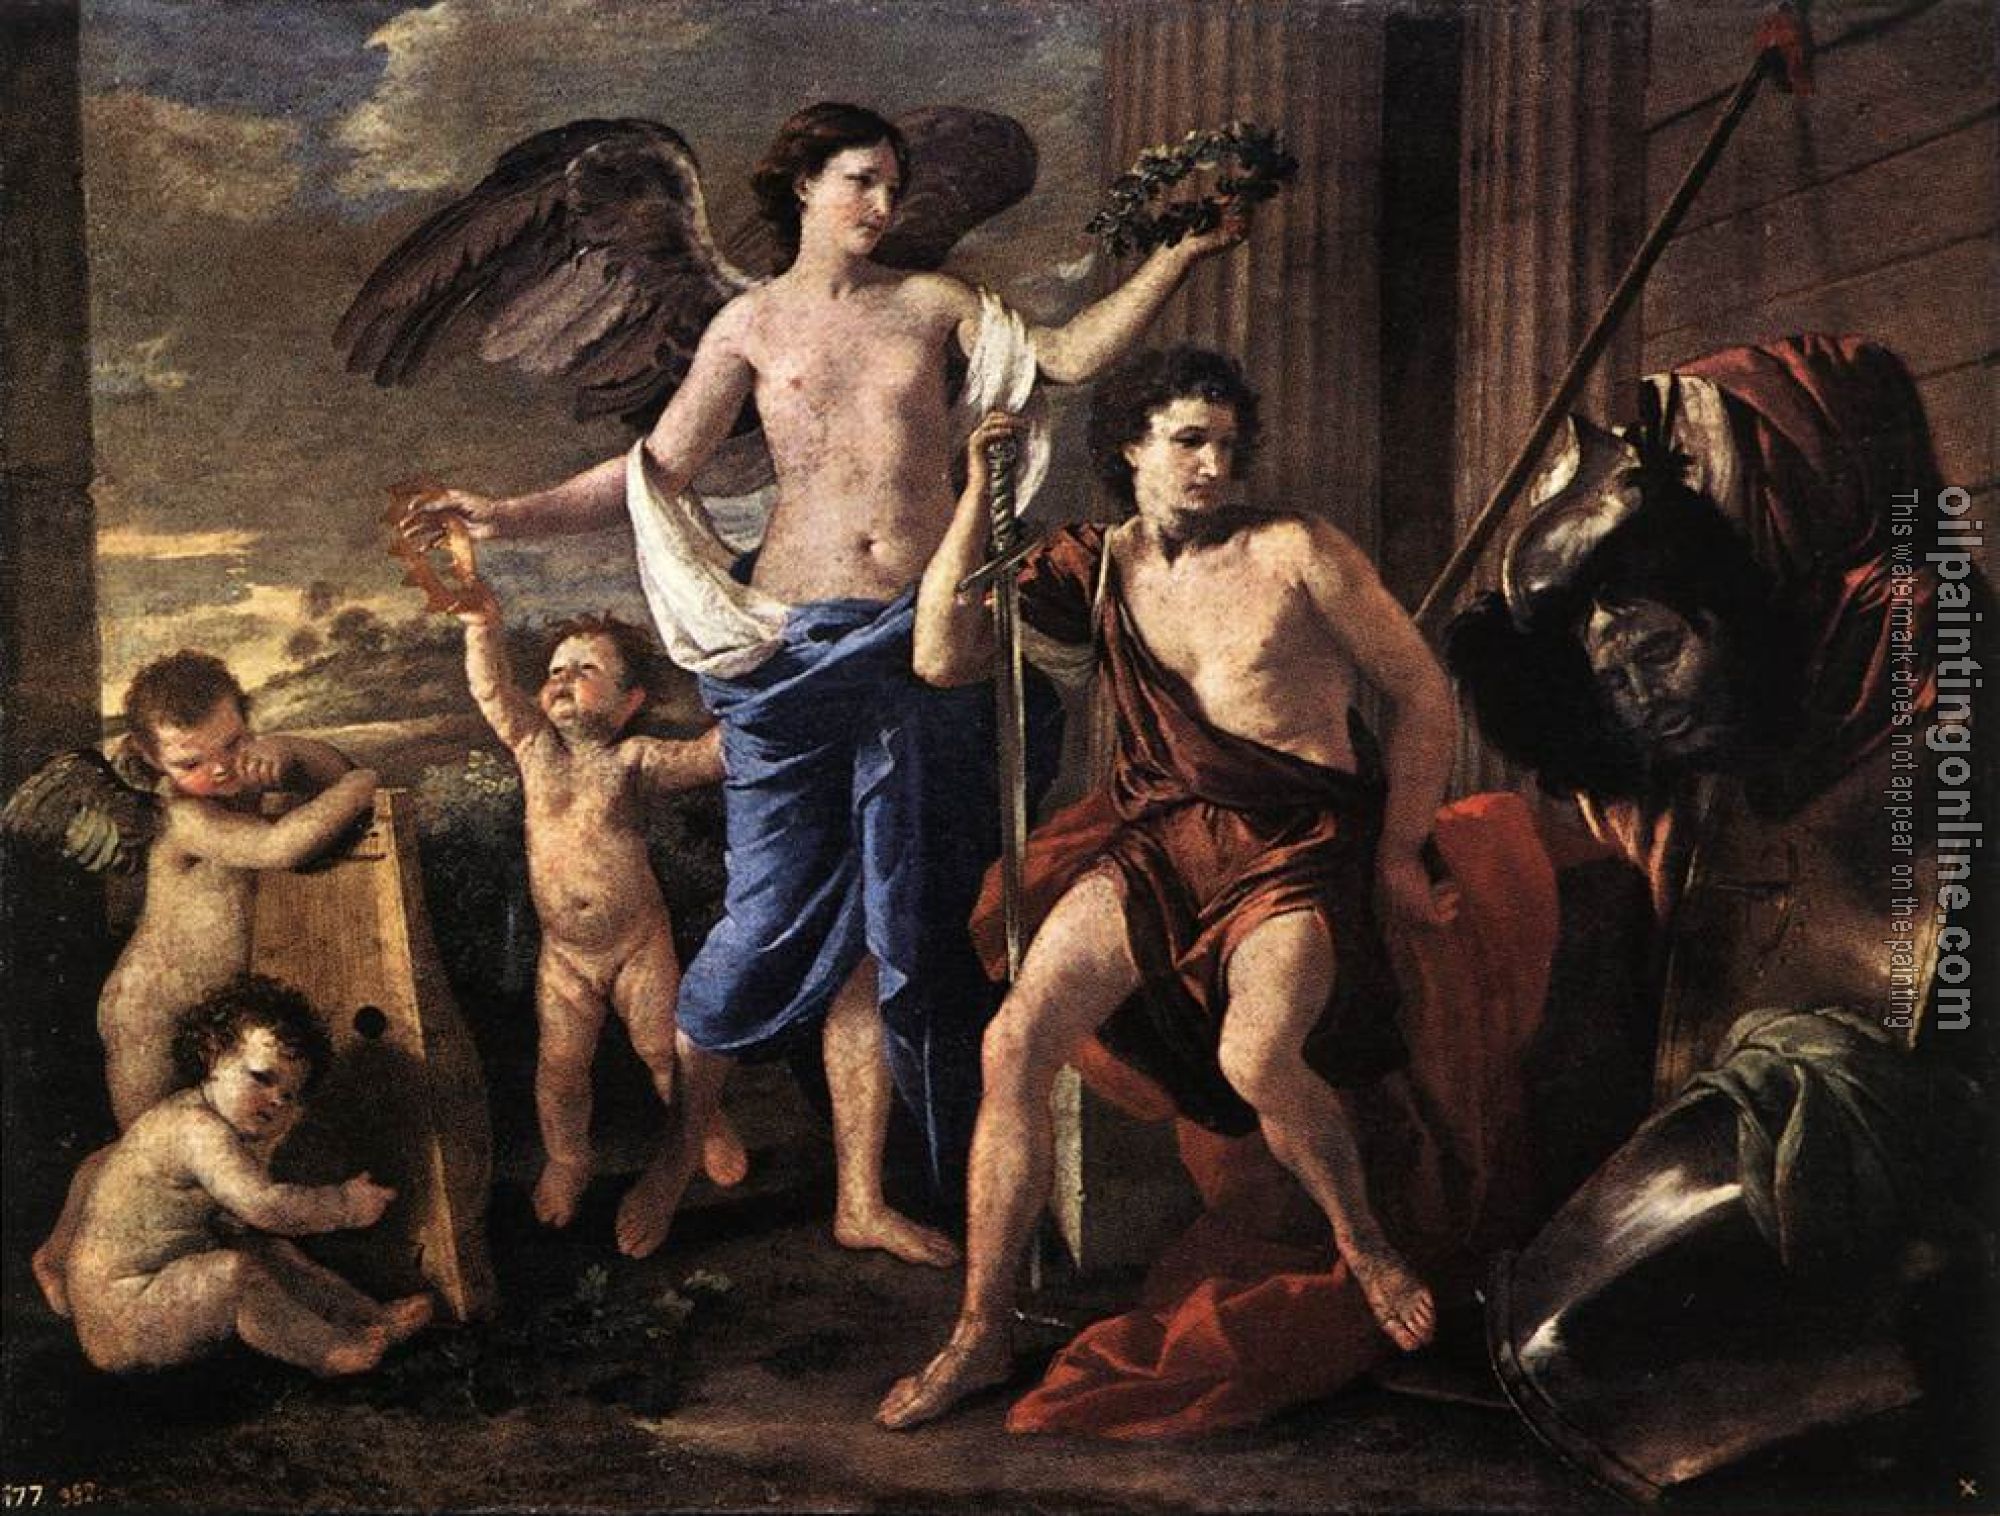 Poussin, Nicolas - The victorious David